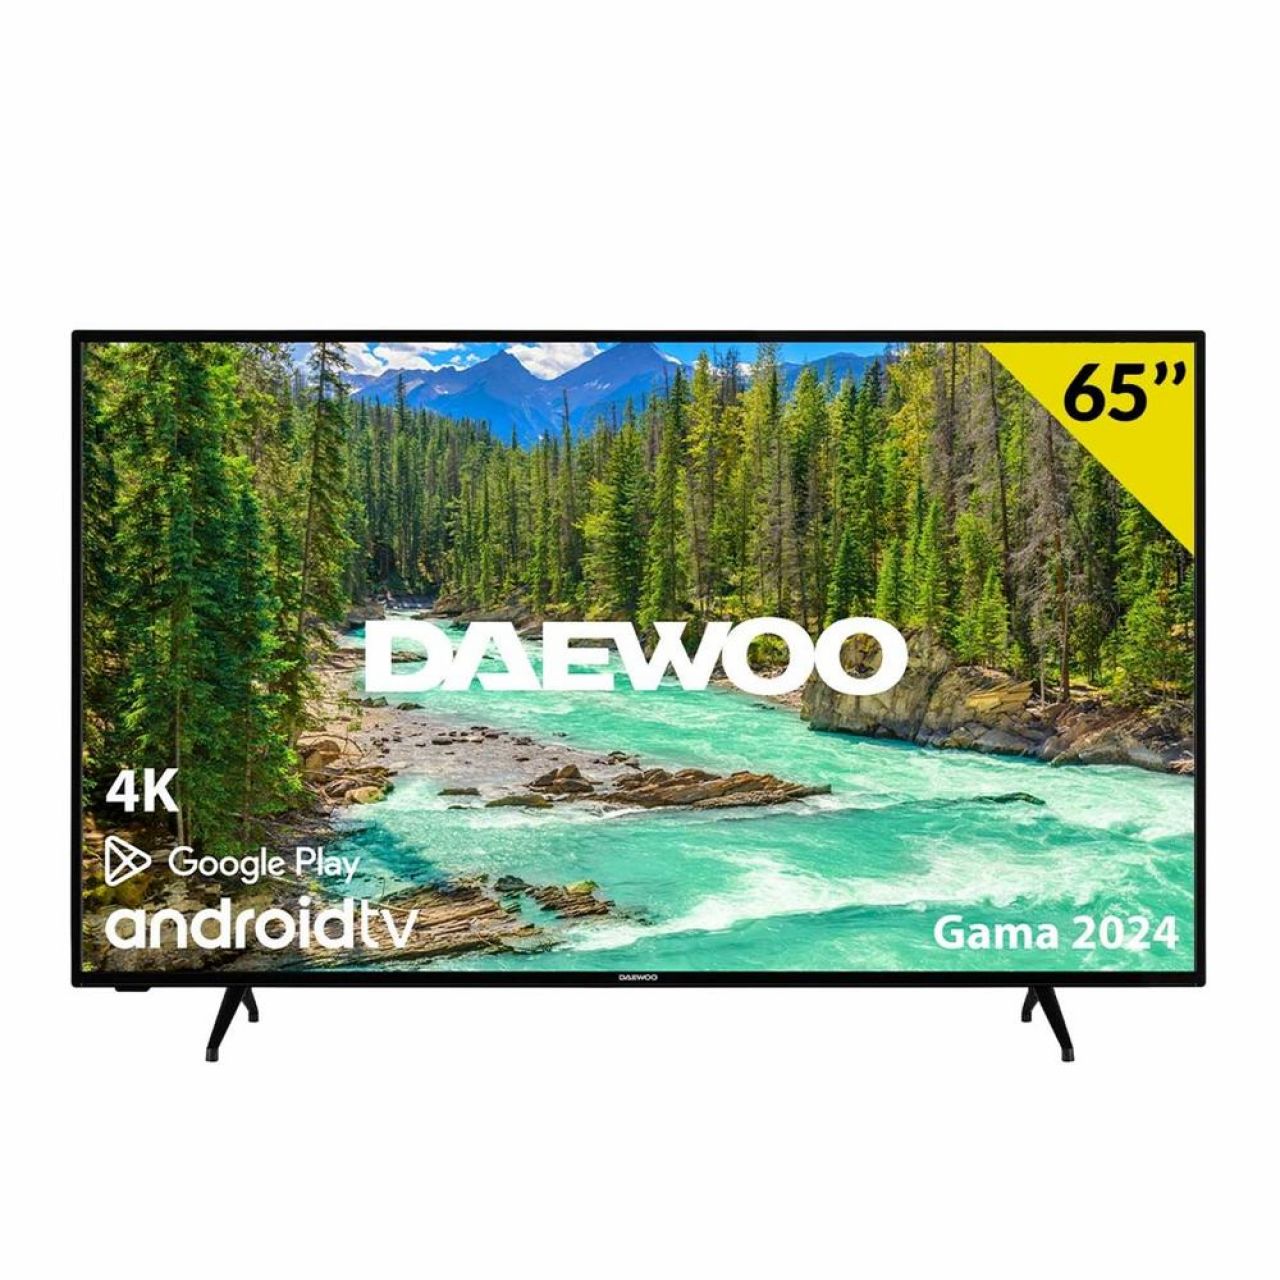 Destacada Tv Daewoo 65" Led 4K UHD D65DM54UAMS Android Smart TV 